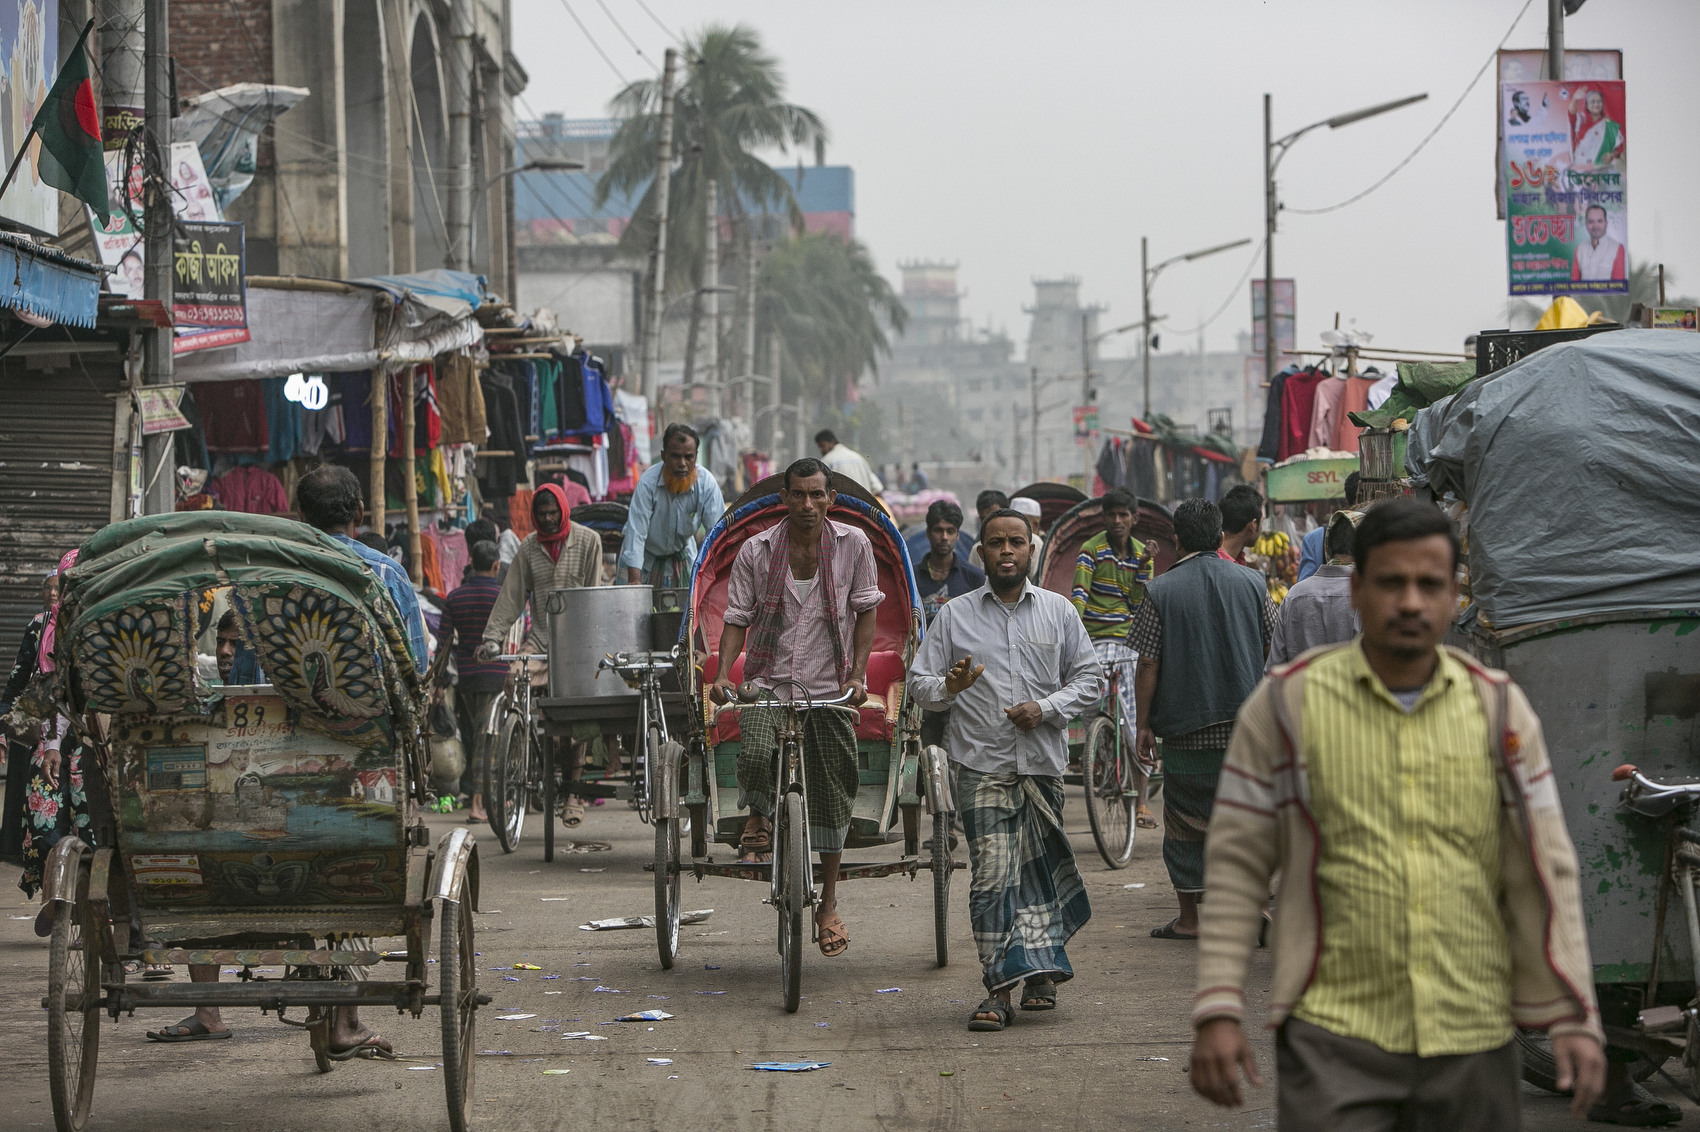 Street scene in Dhaka, Bangladesh.